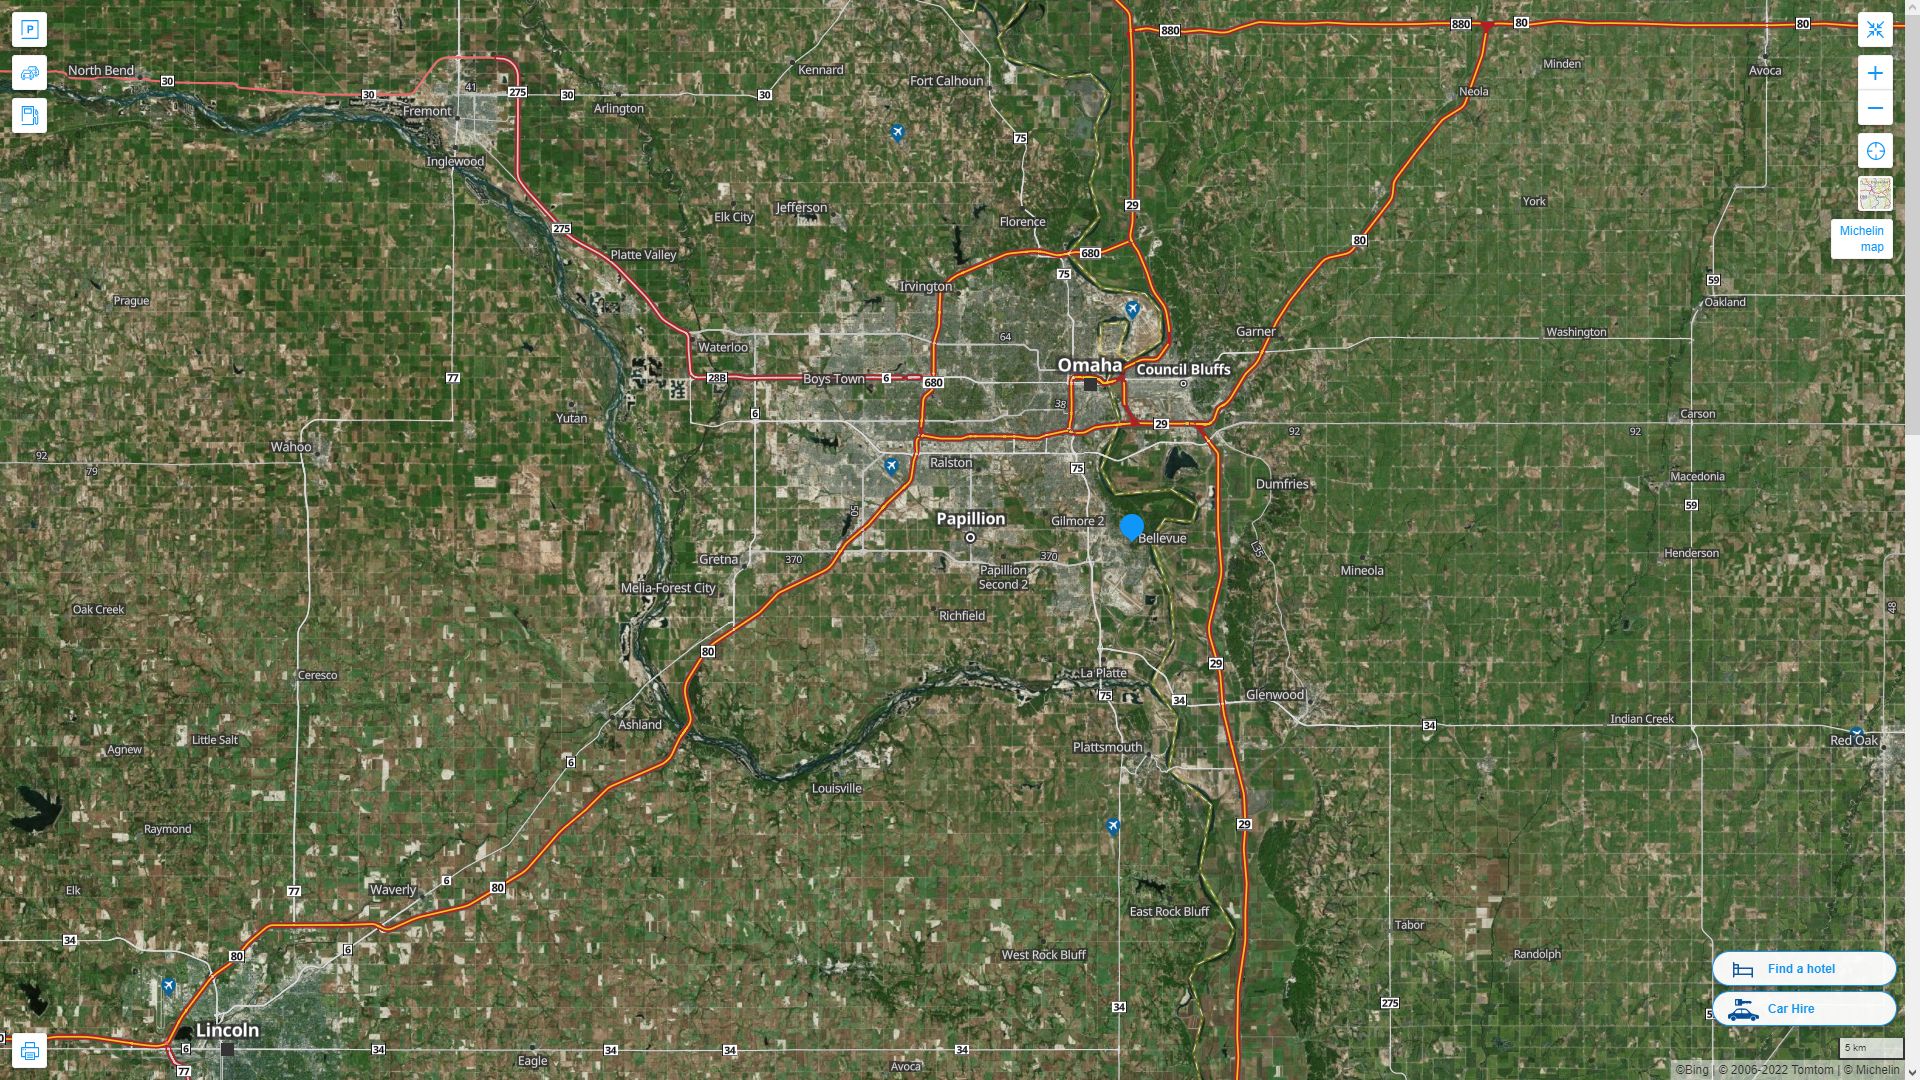 Bellevue Nebraska Highway and Road Map with Satellite View